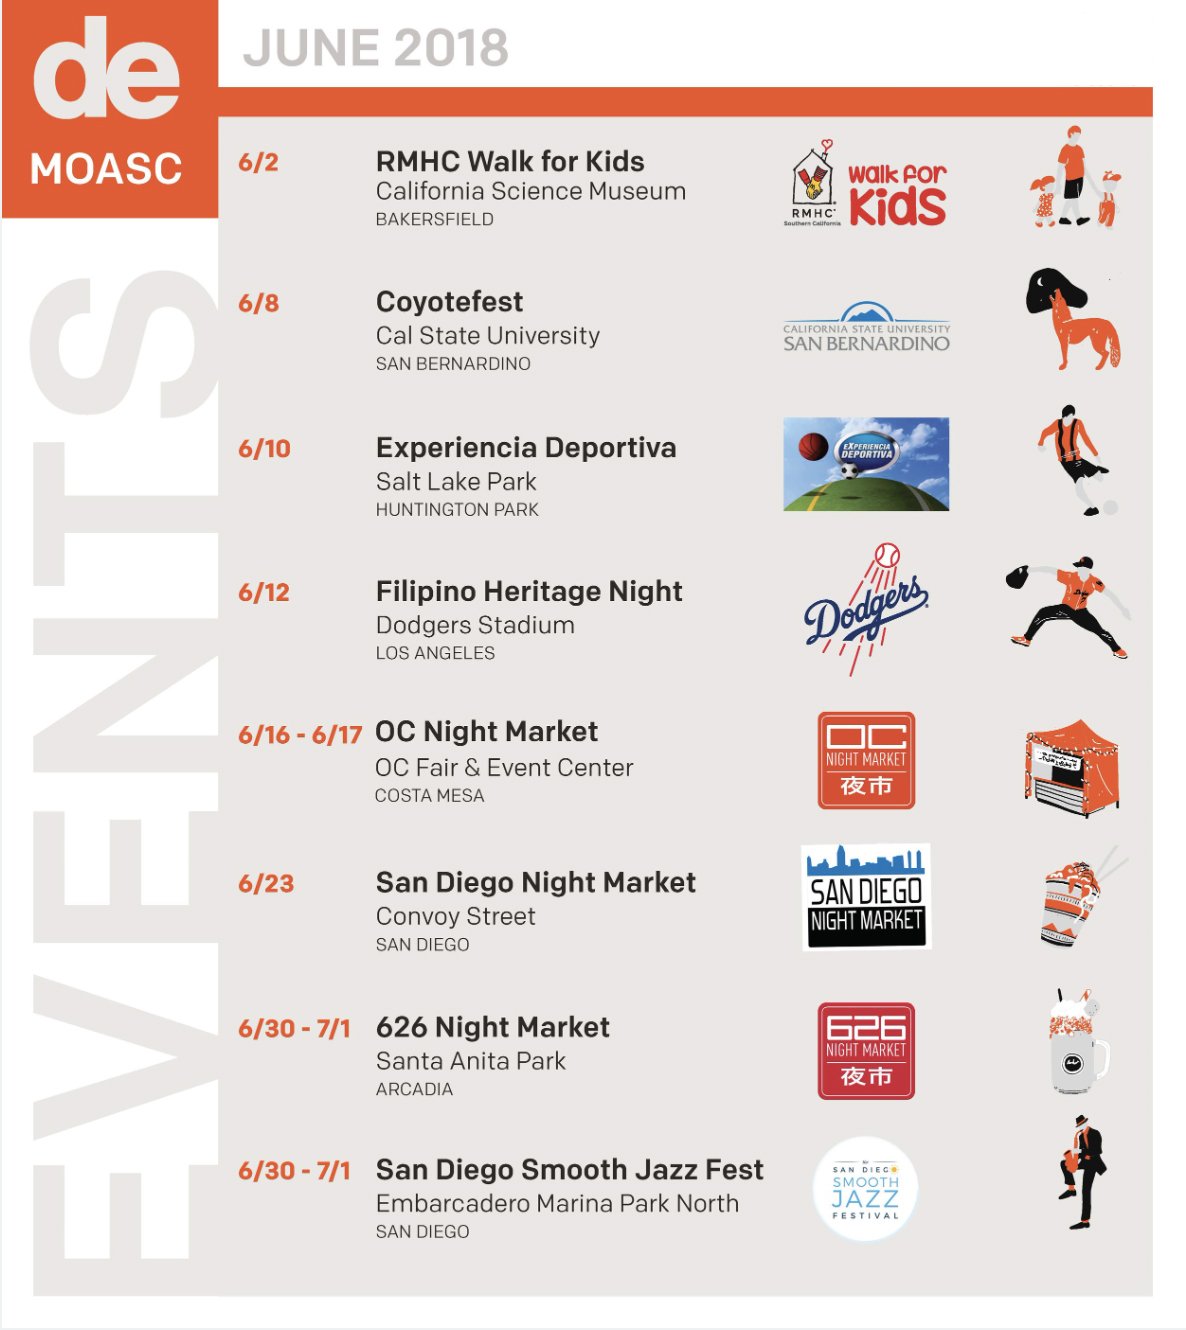 Moasc June 2018 Events.jpg